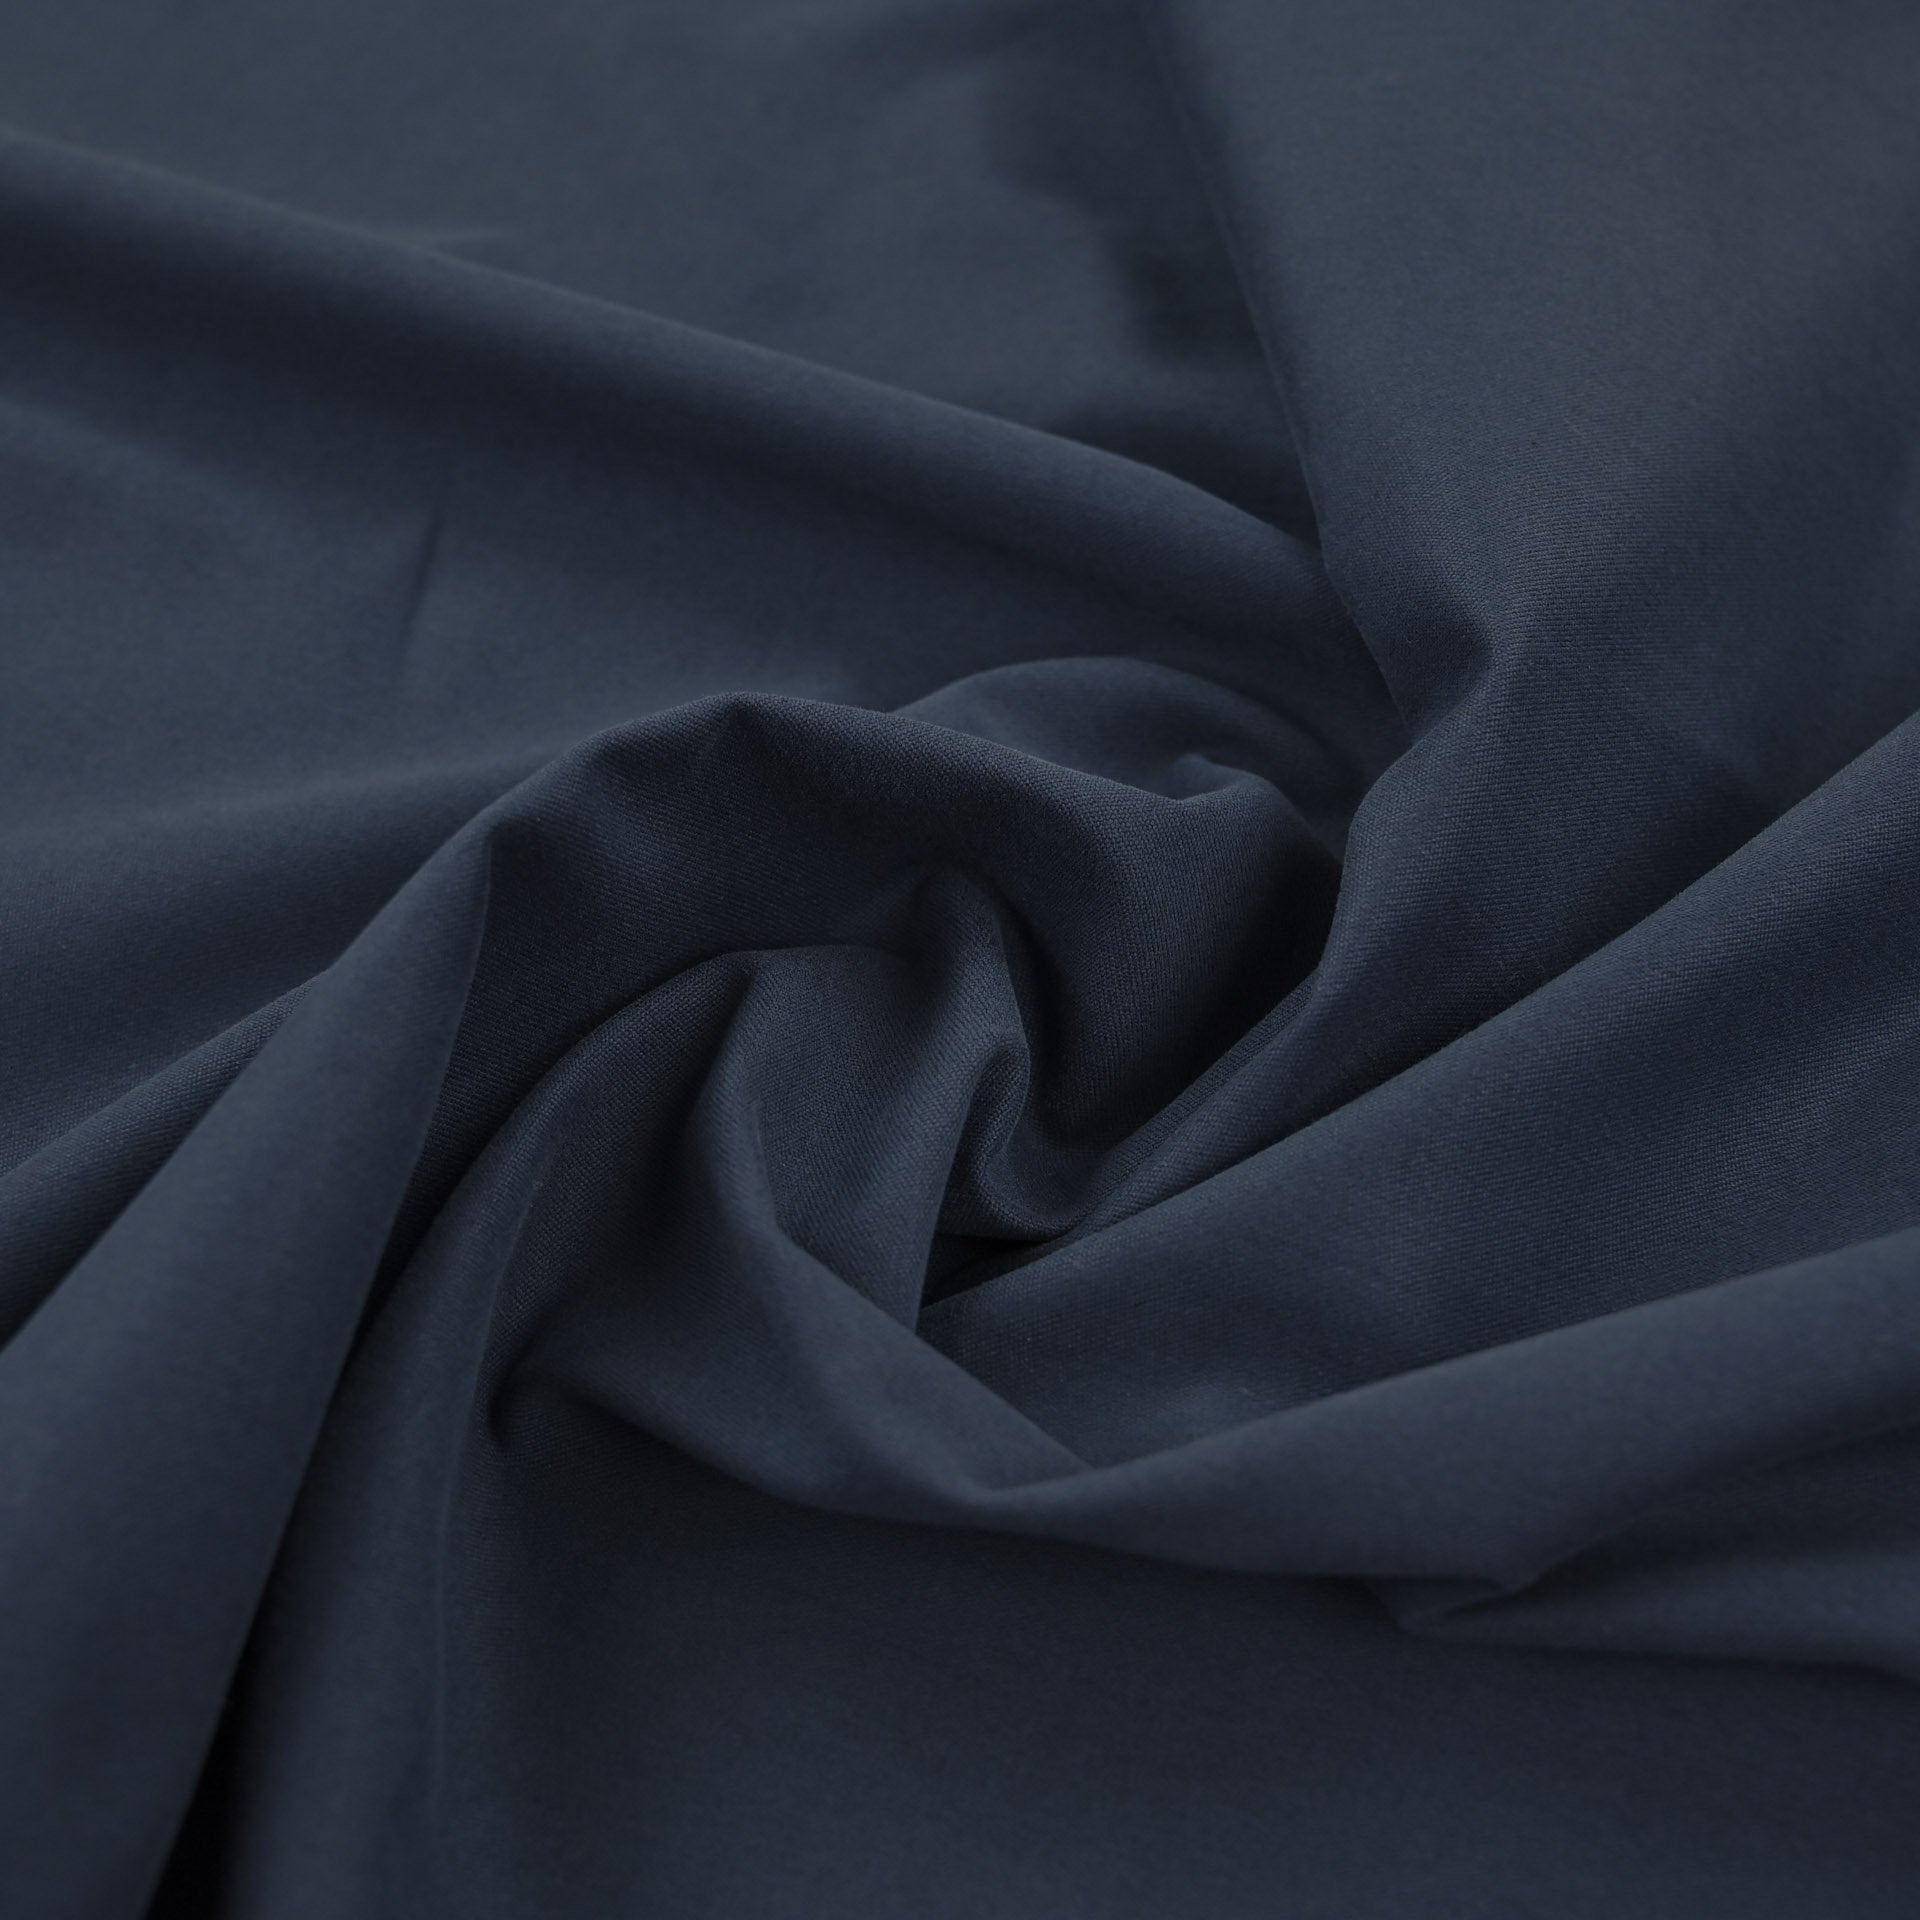 Navy Twill Fabric 97759